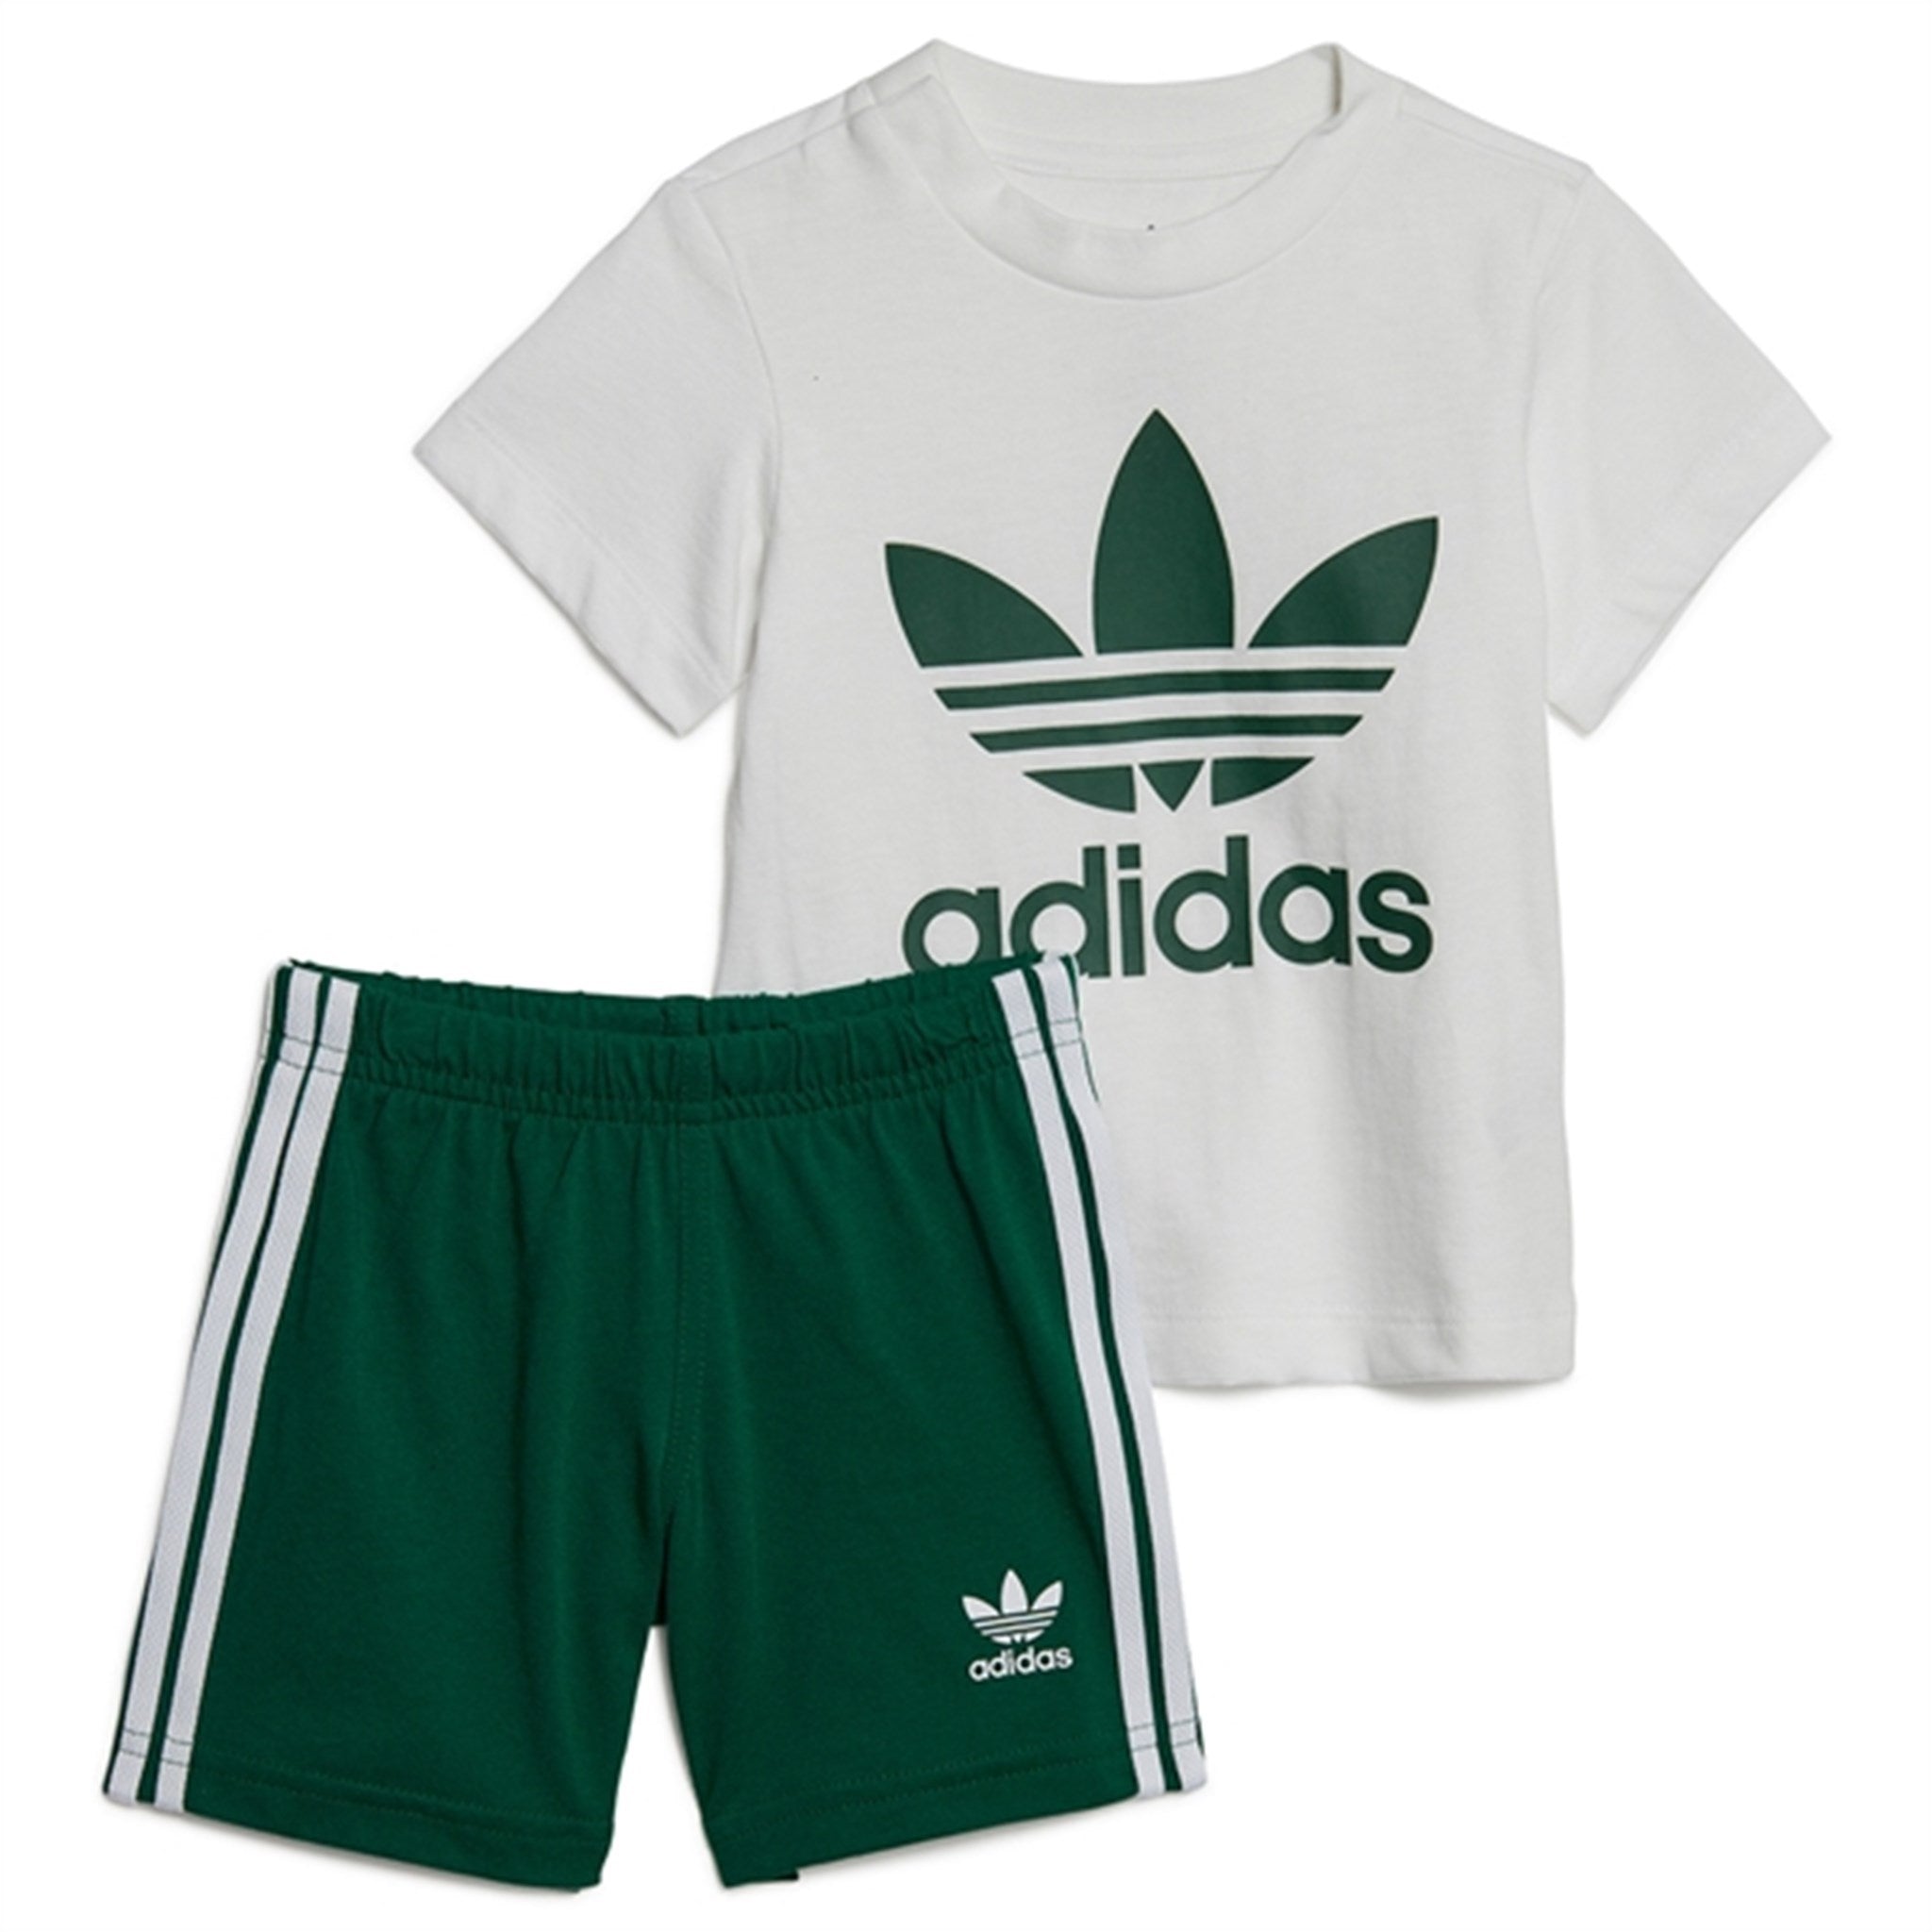 adidas Originals Dark Green Shorts Tee Set